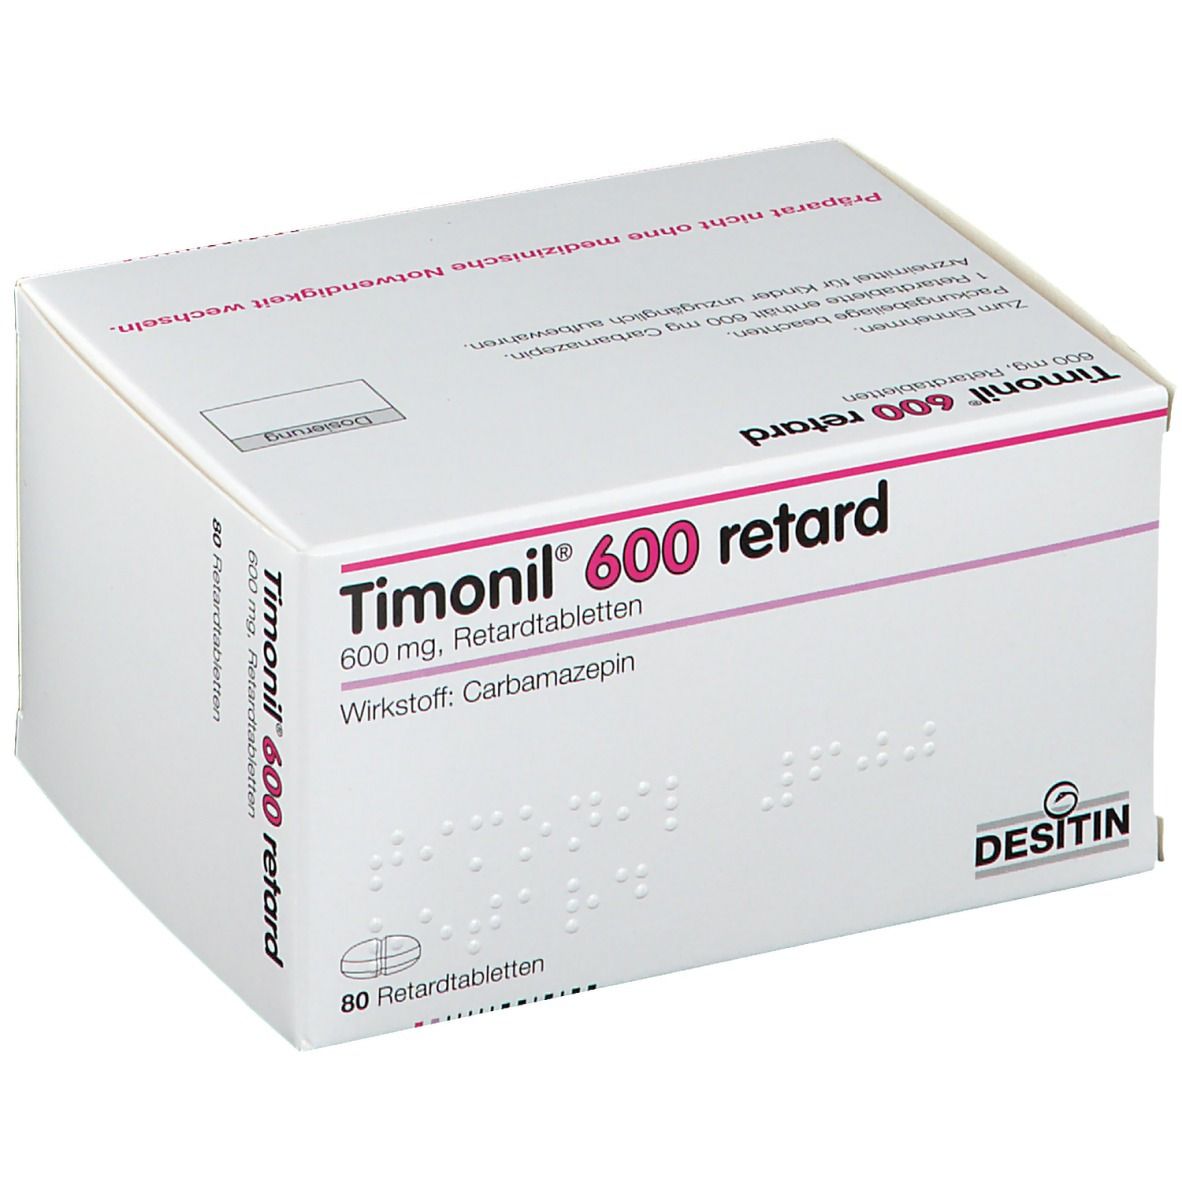 Timonil® 600 retard